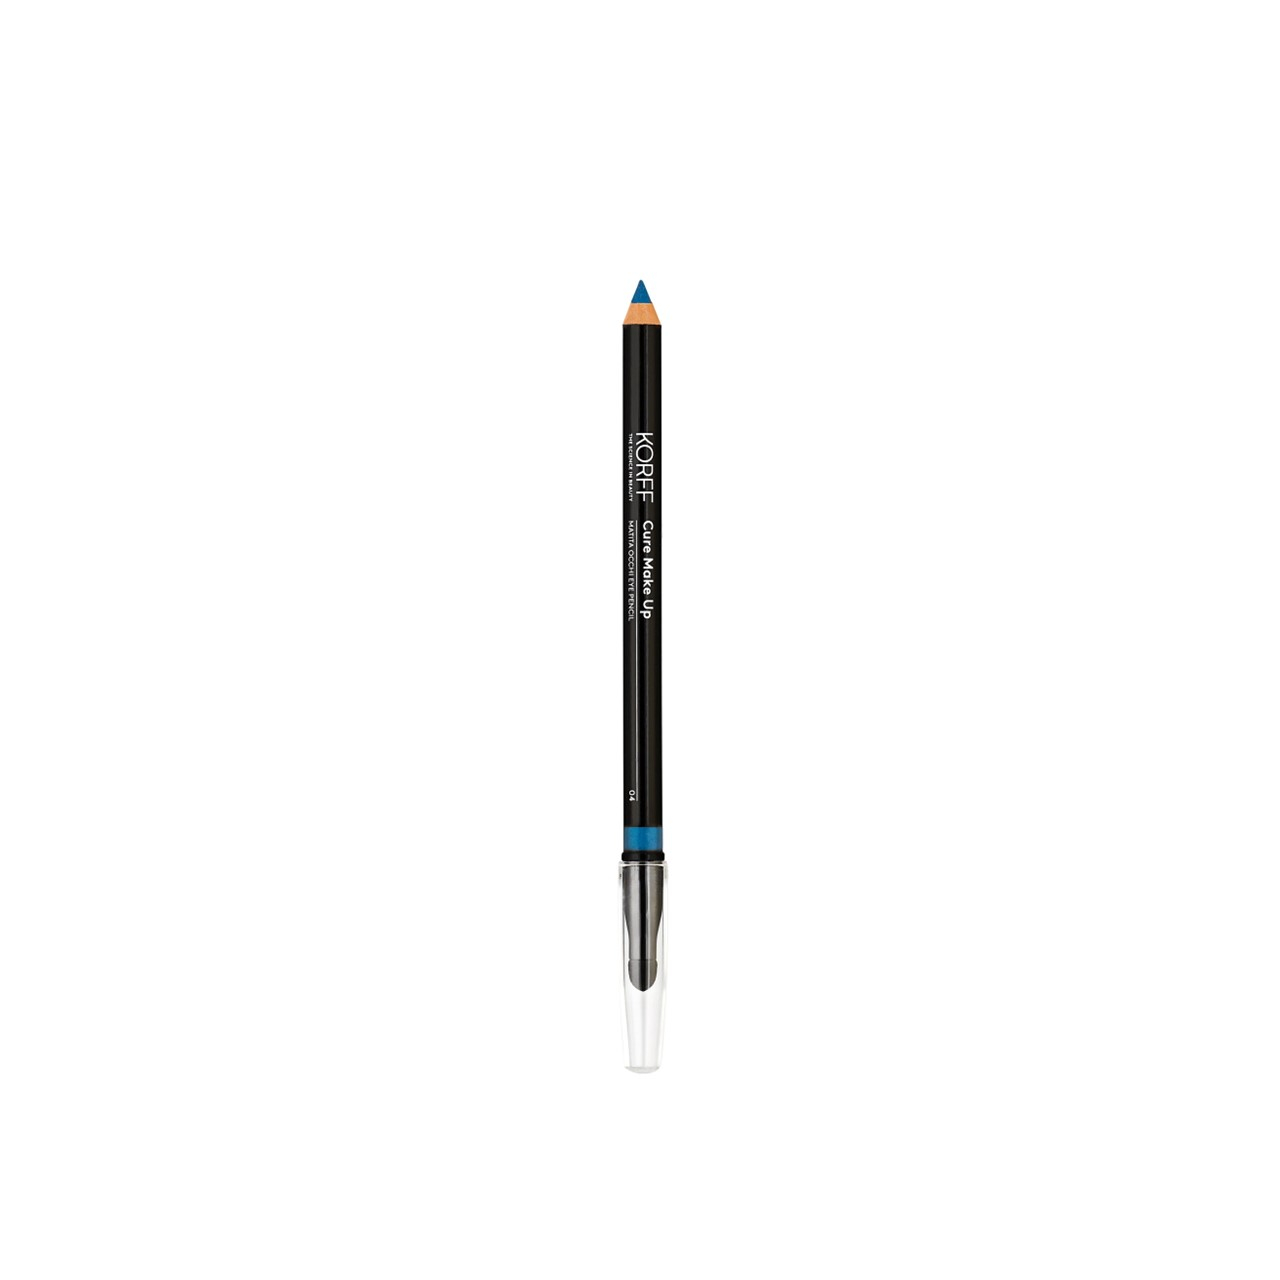 Korff Cure Make-Up Eye Pencil 04 1.1g (0.039 oz)